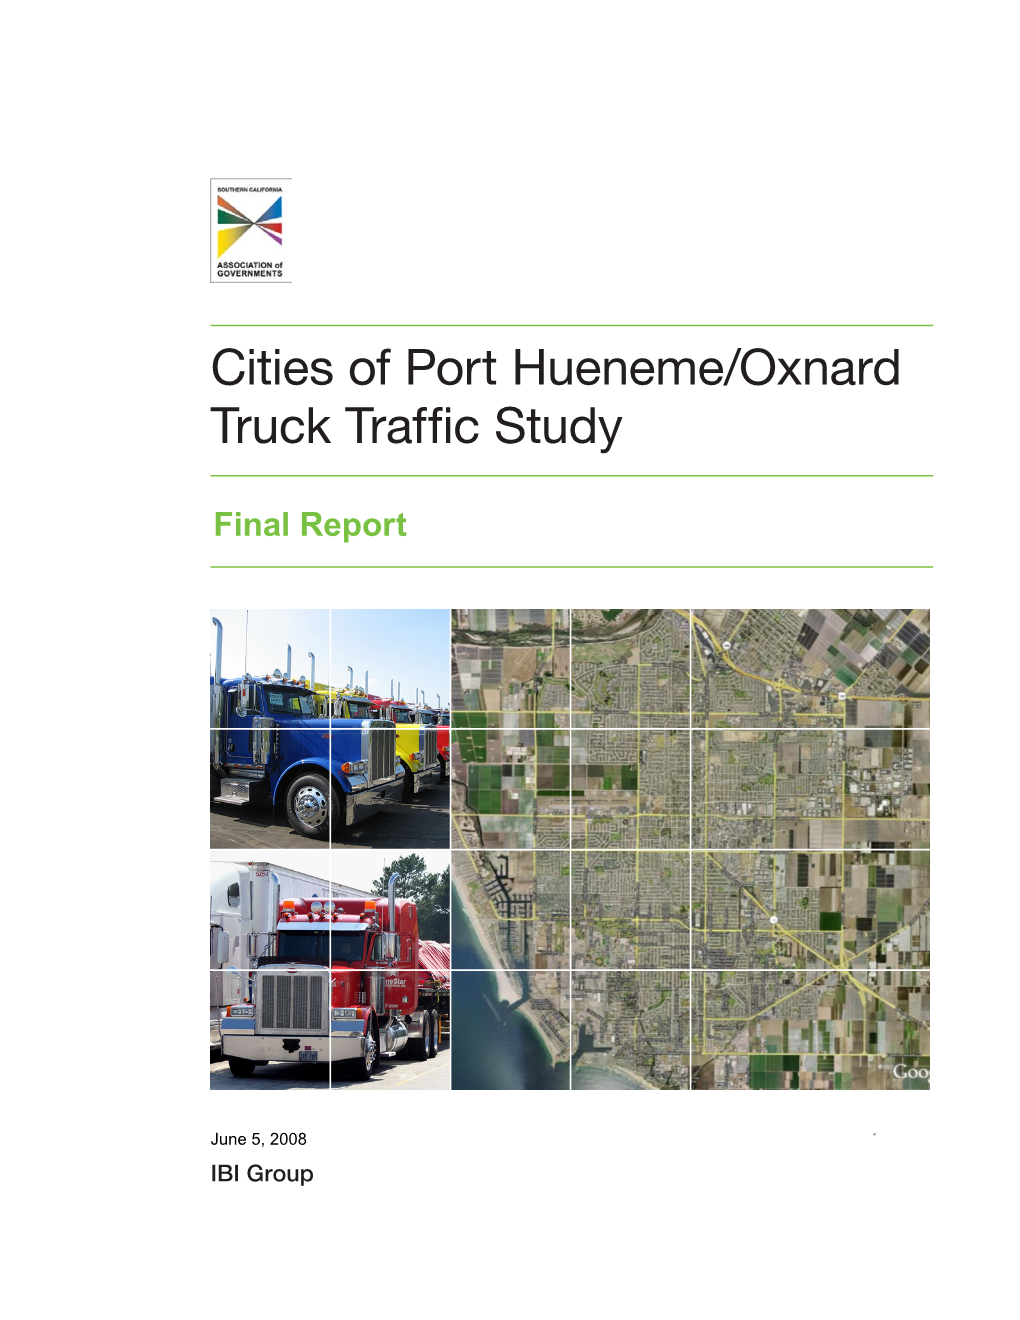 Cities of Port Hueneme/Oxnard Truck Traffic Study